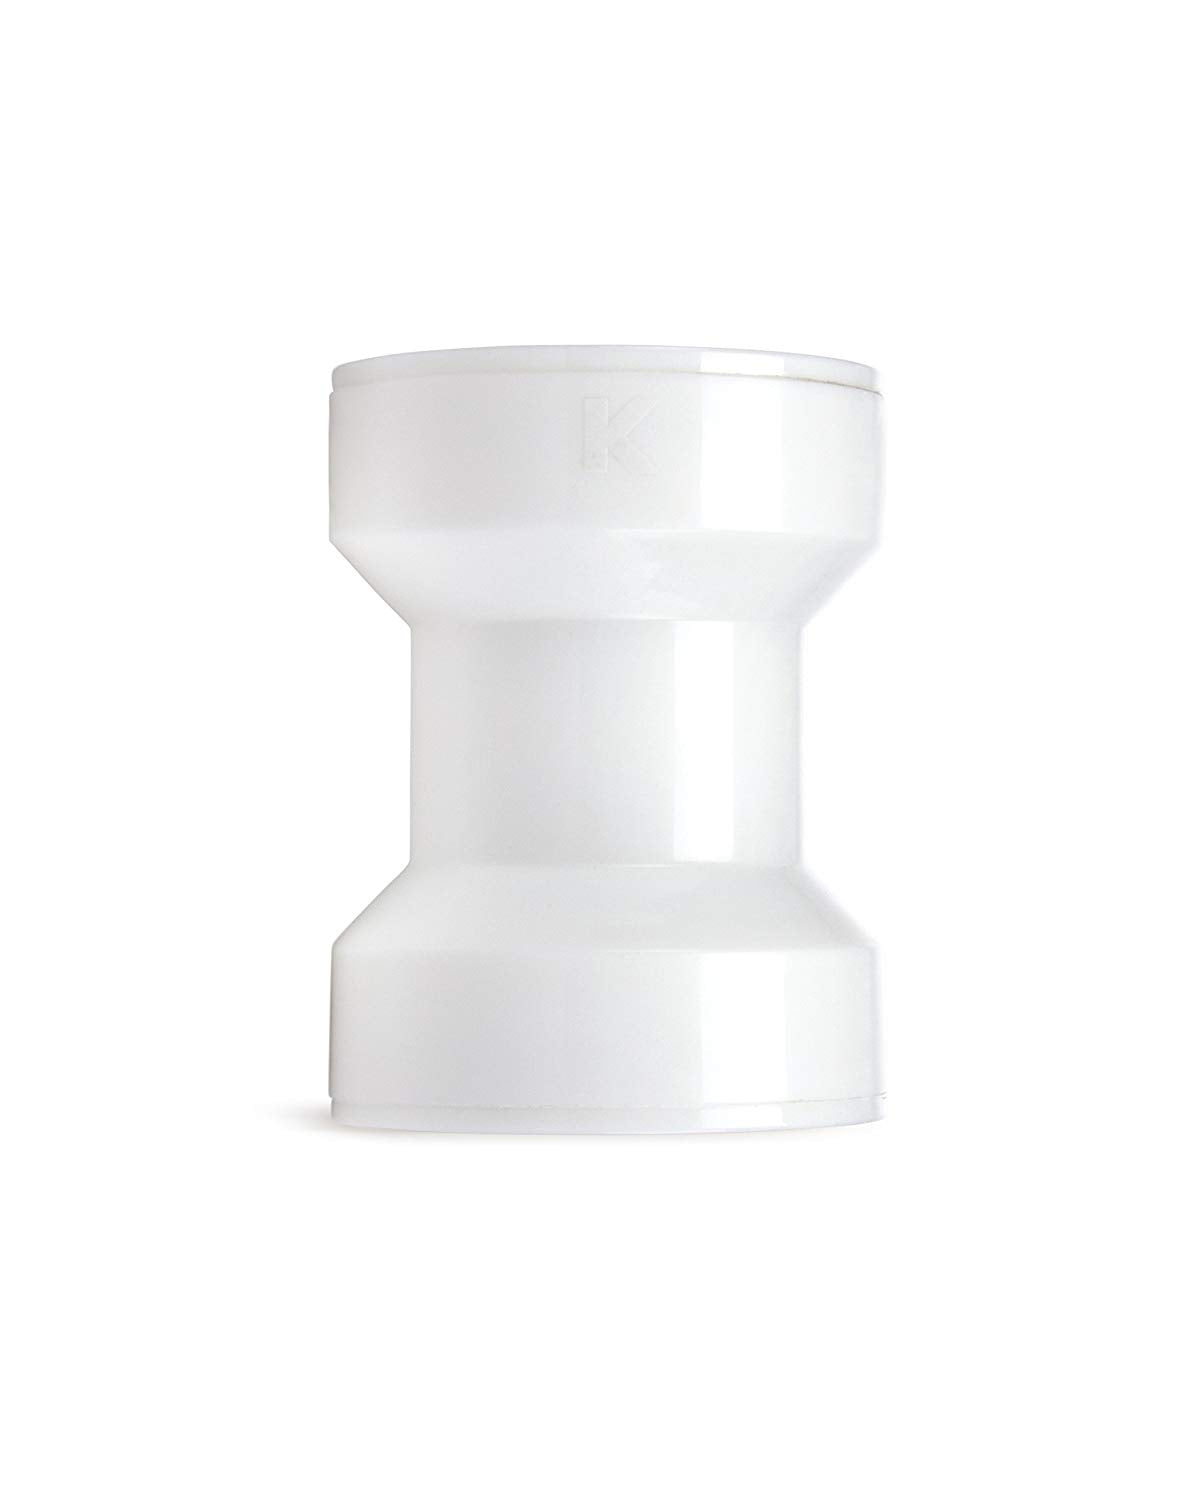 Kenny 46QLK Insta-Plumb Plastic Straight Coupling for Kitchen, White, 1/2"